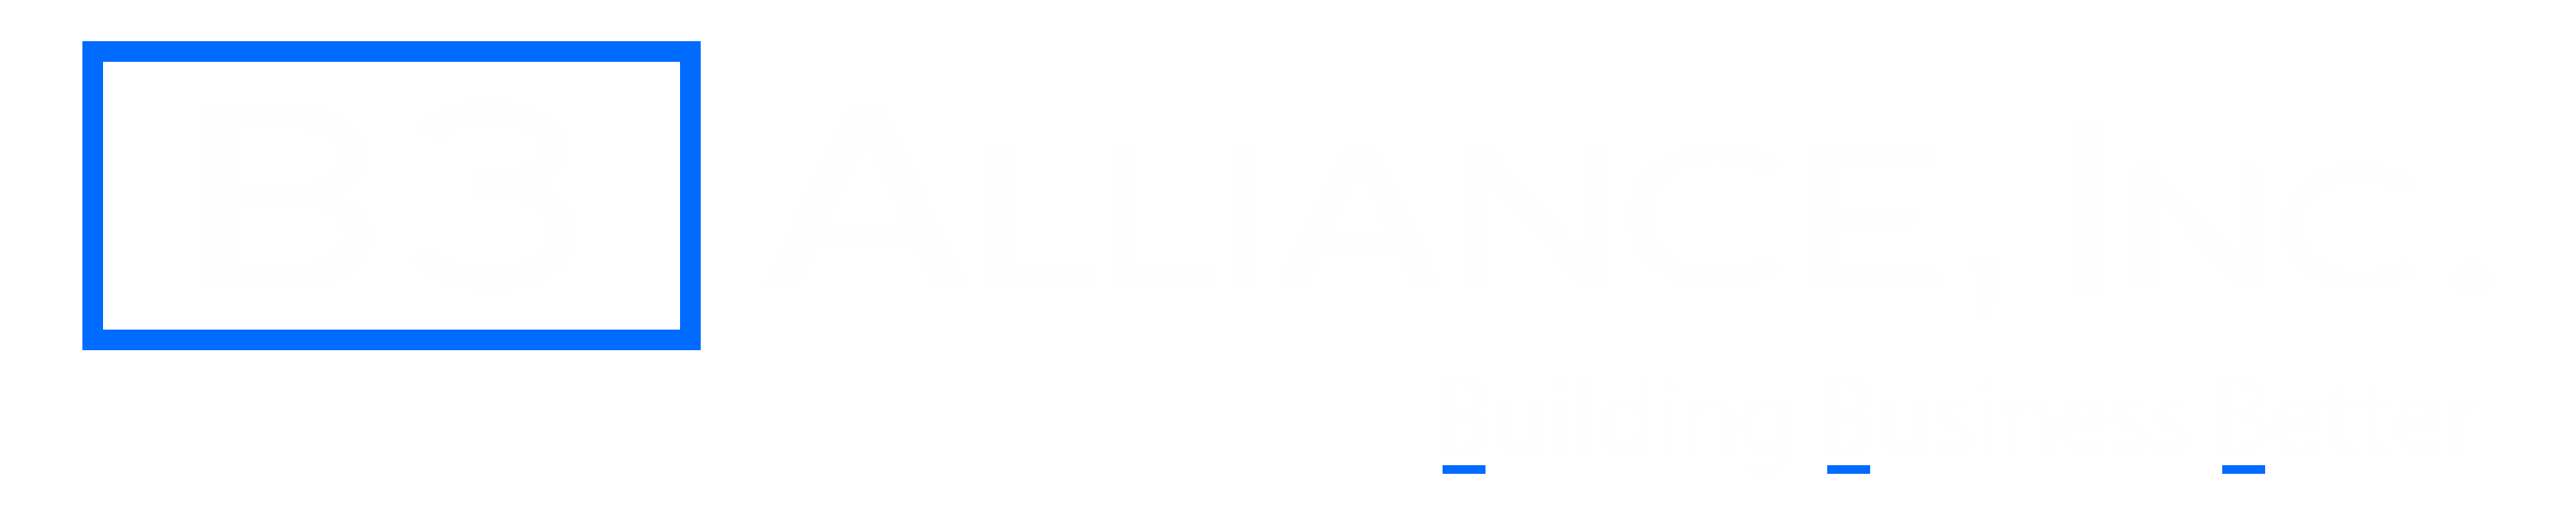 B3 Alliance, Inc.